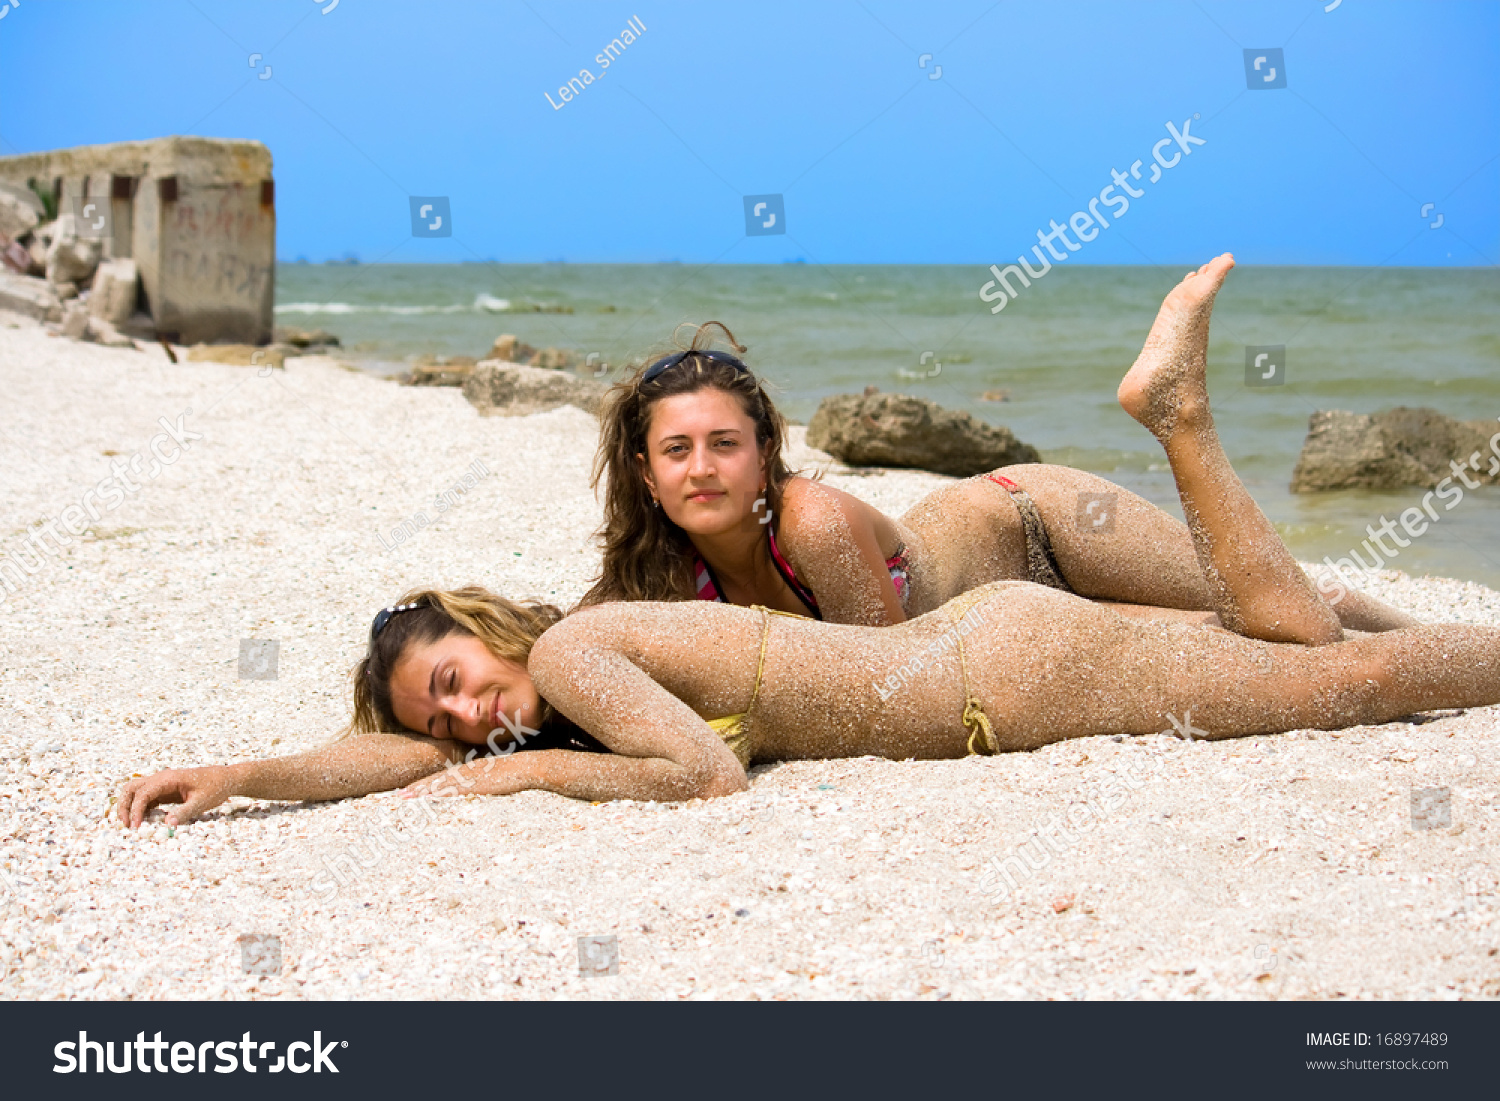 christiana george add girls sunbathing pics photo